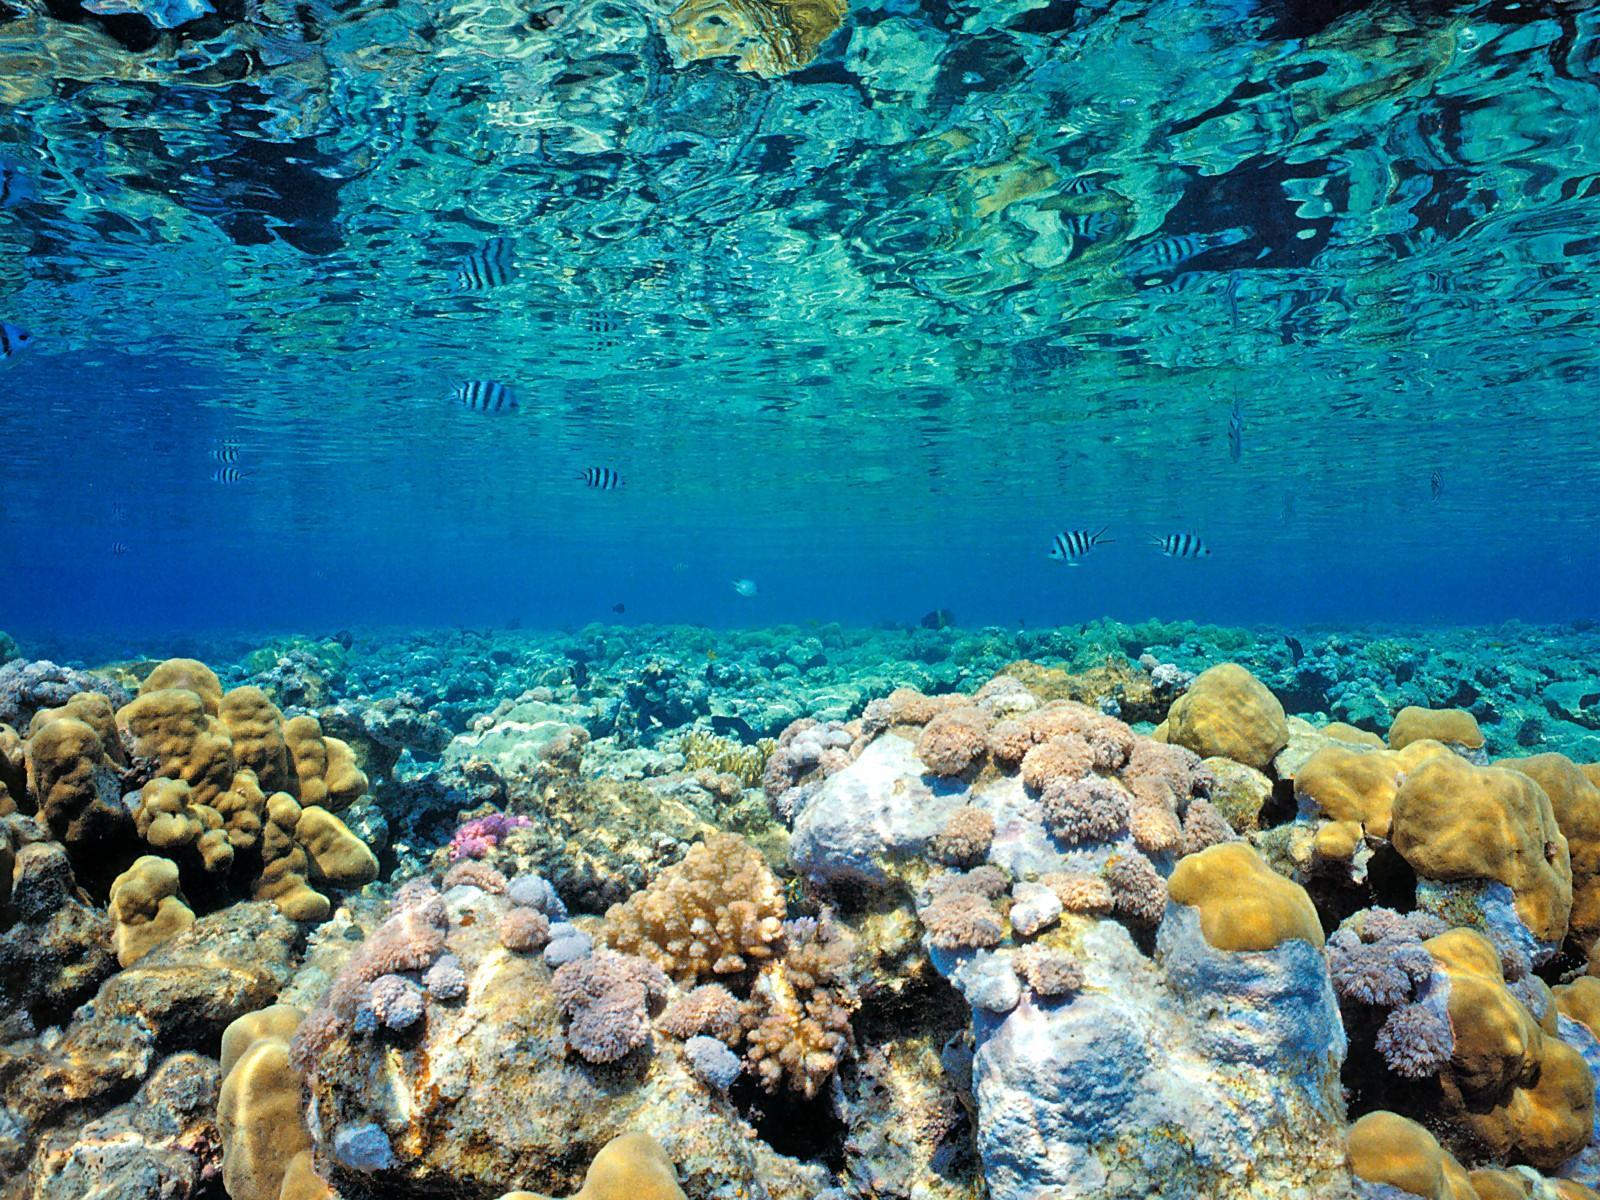 hd coral reef wallpaper